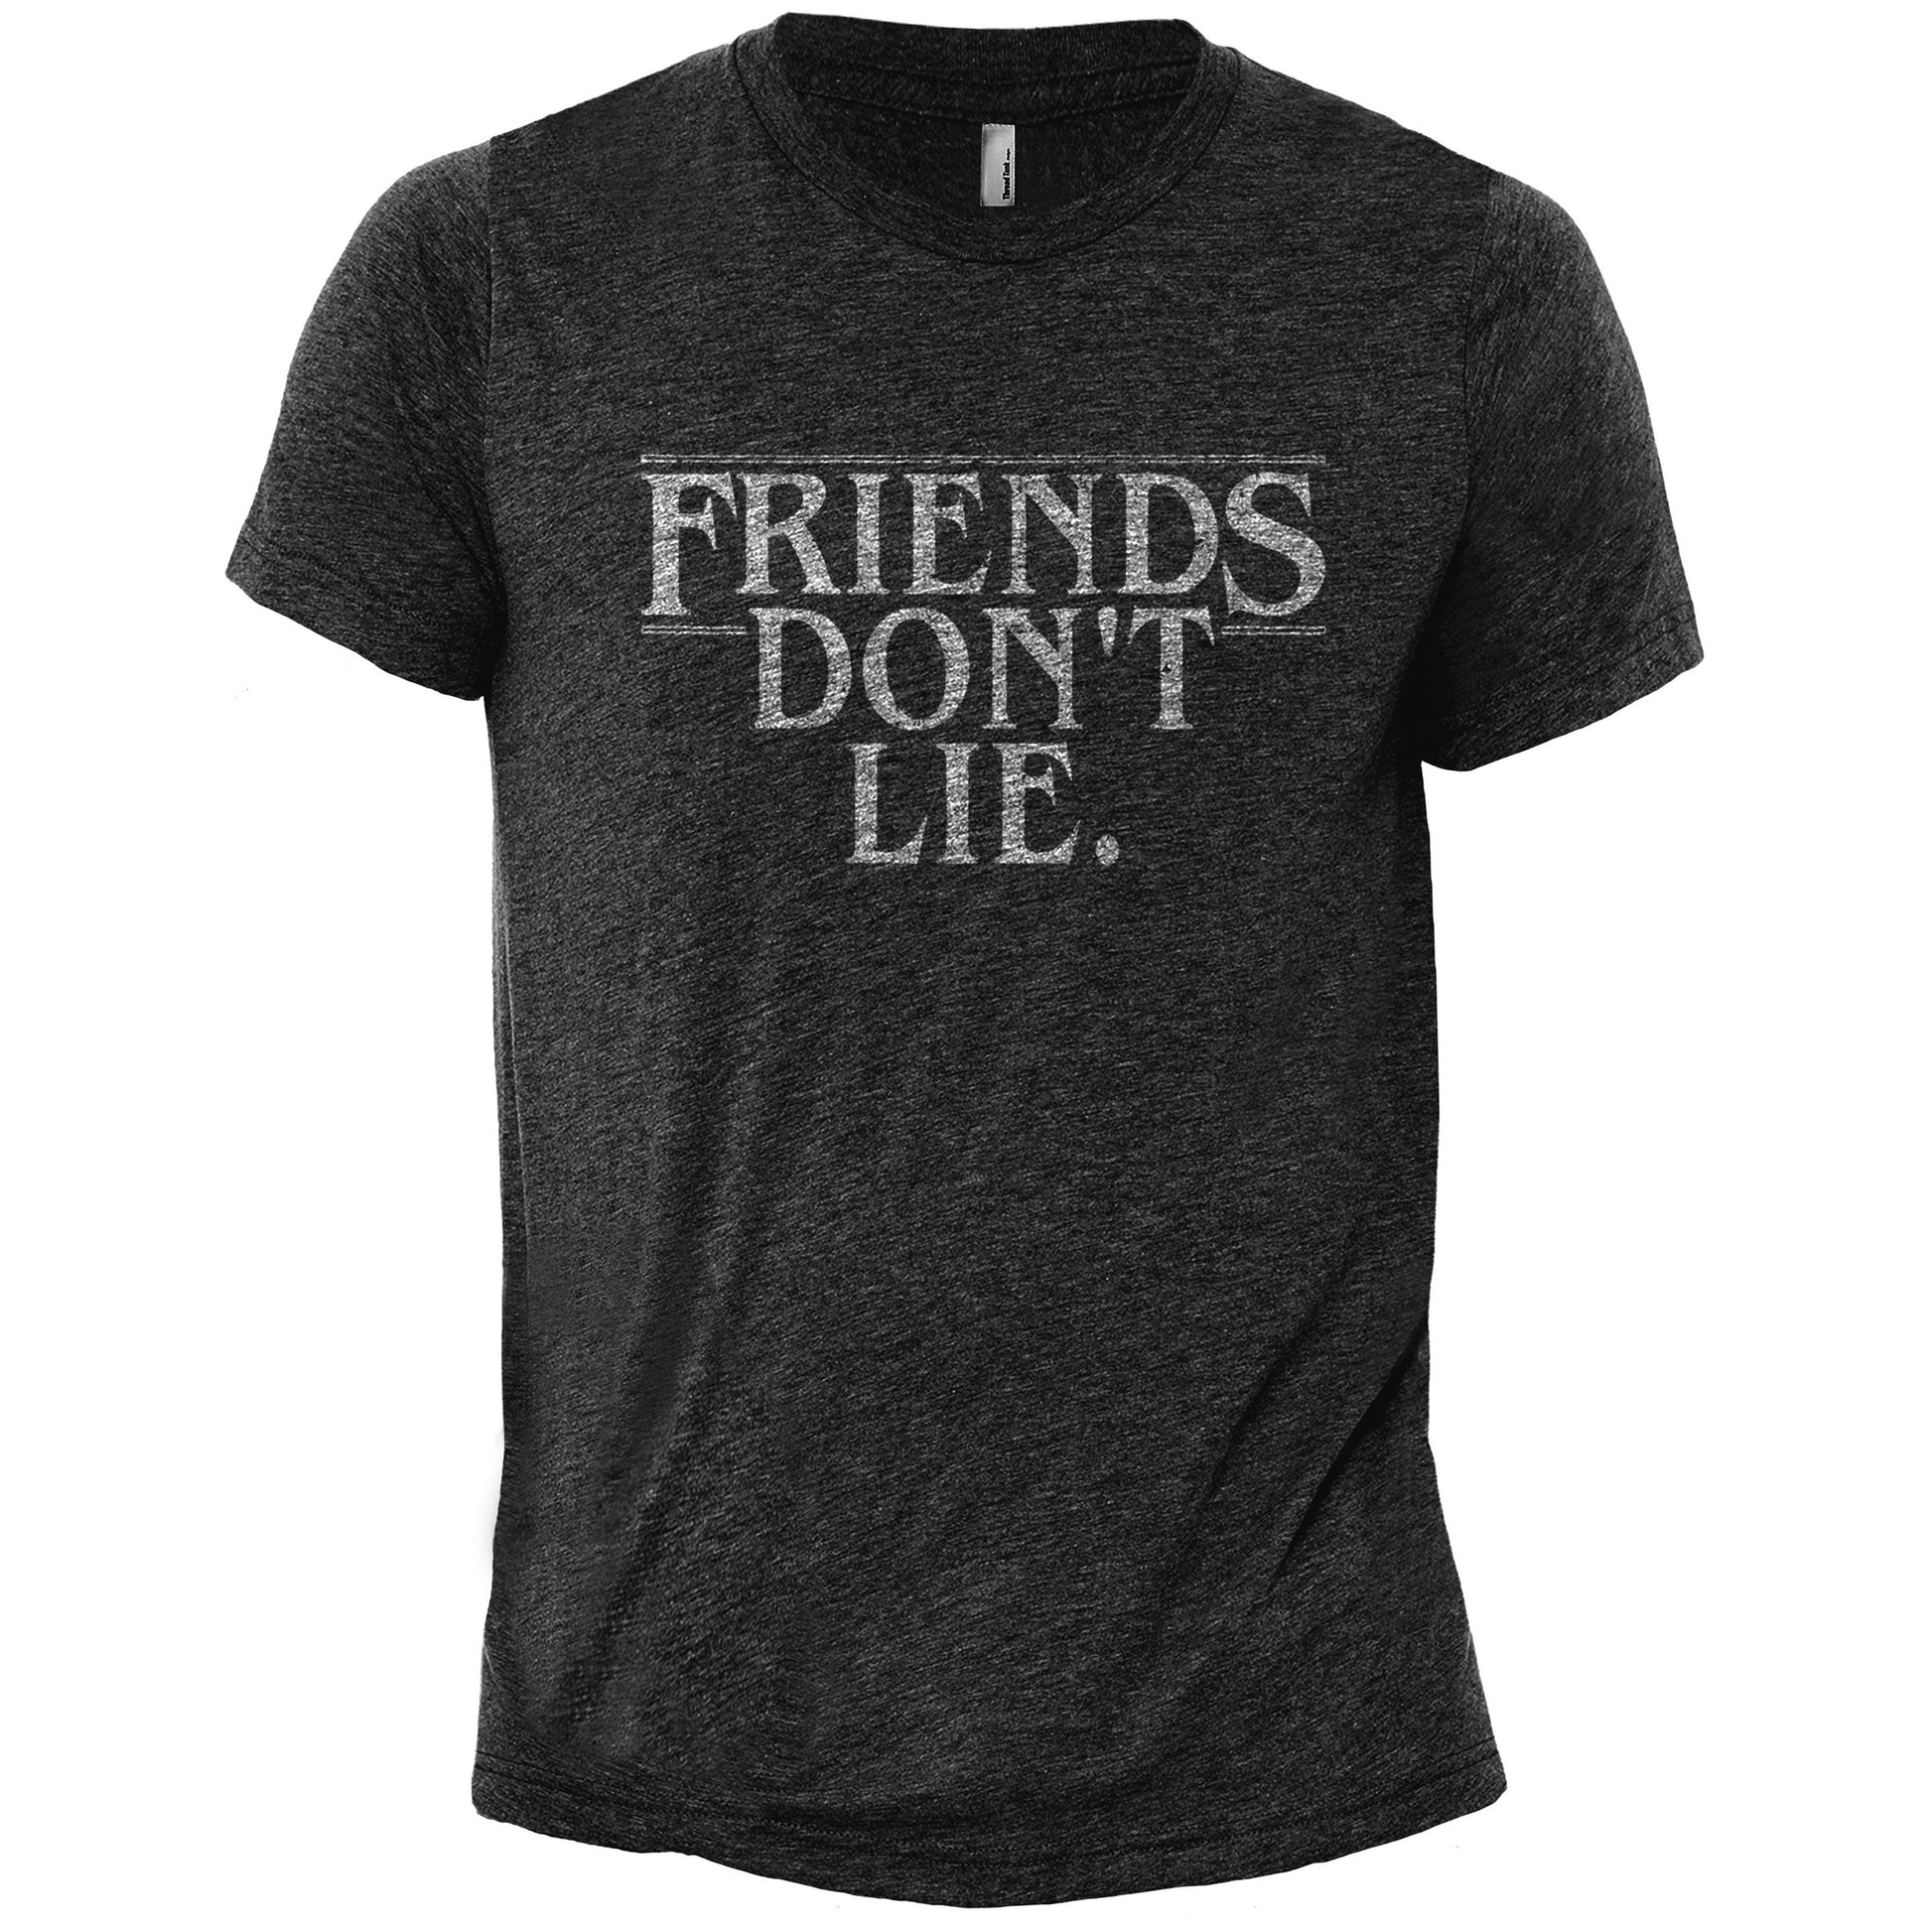 Friends Dont Lie - thread tank | Stories you can wear.